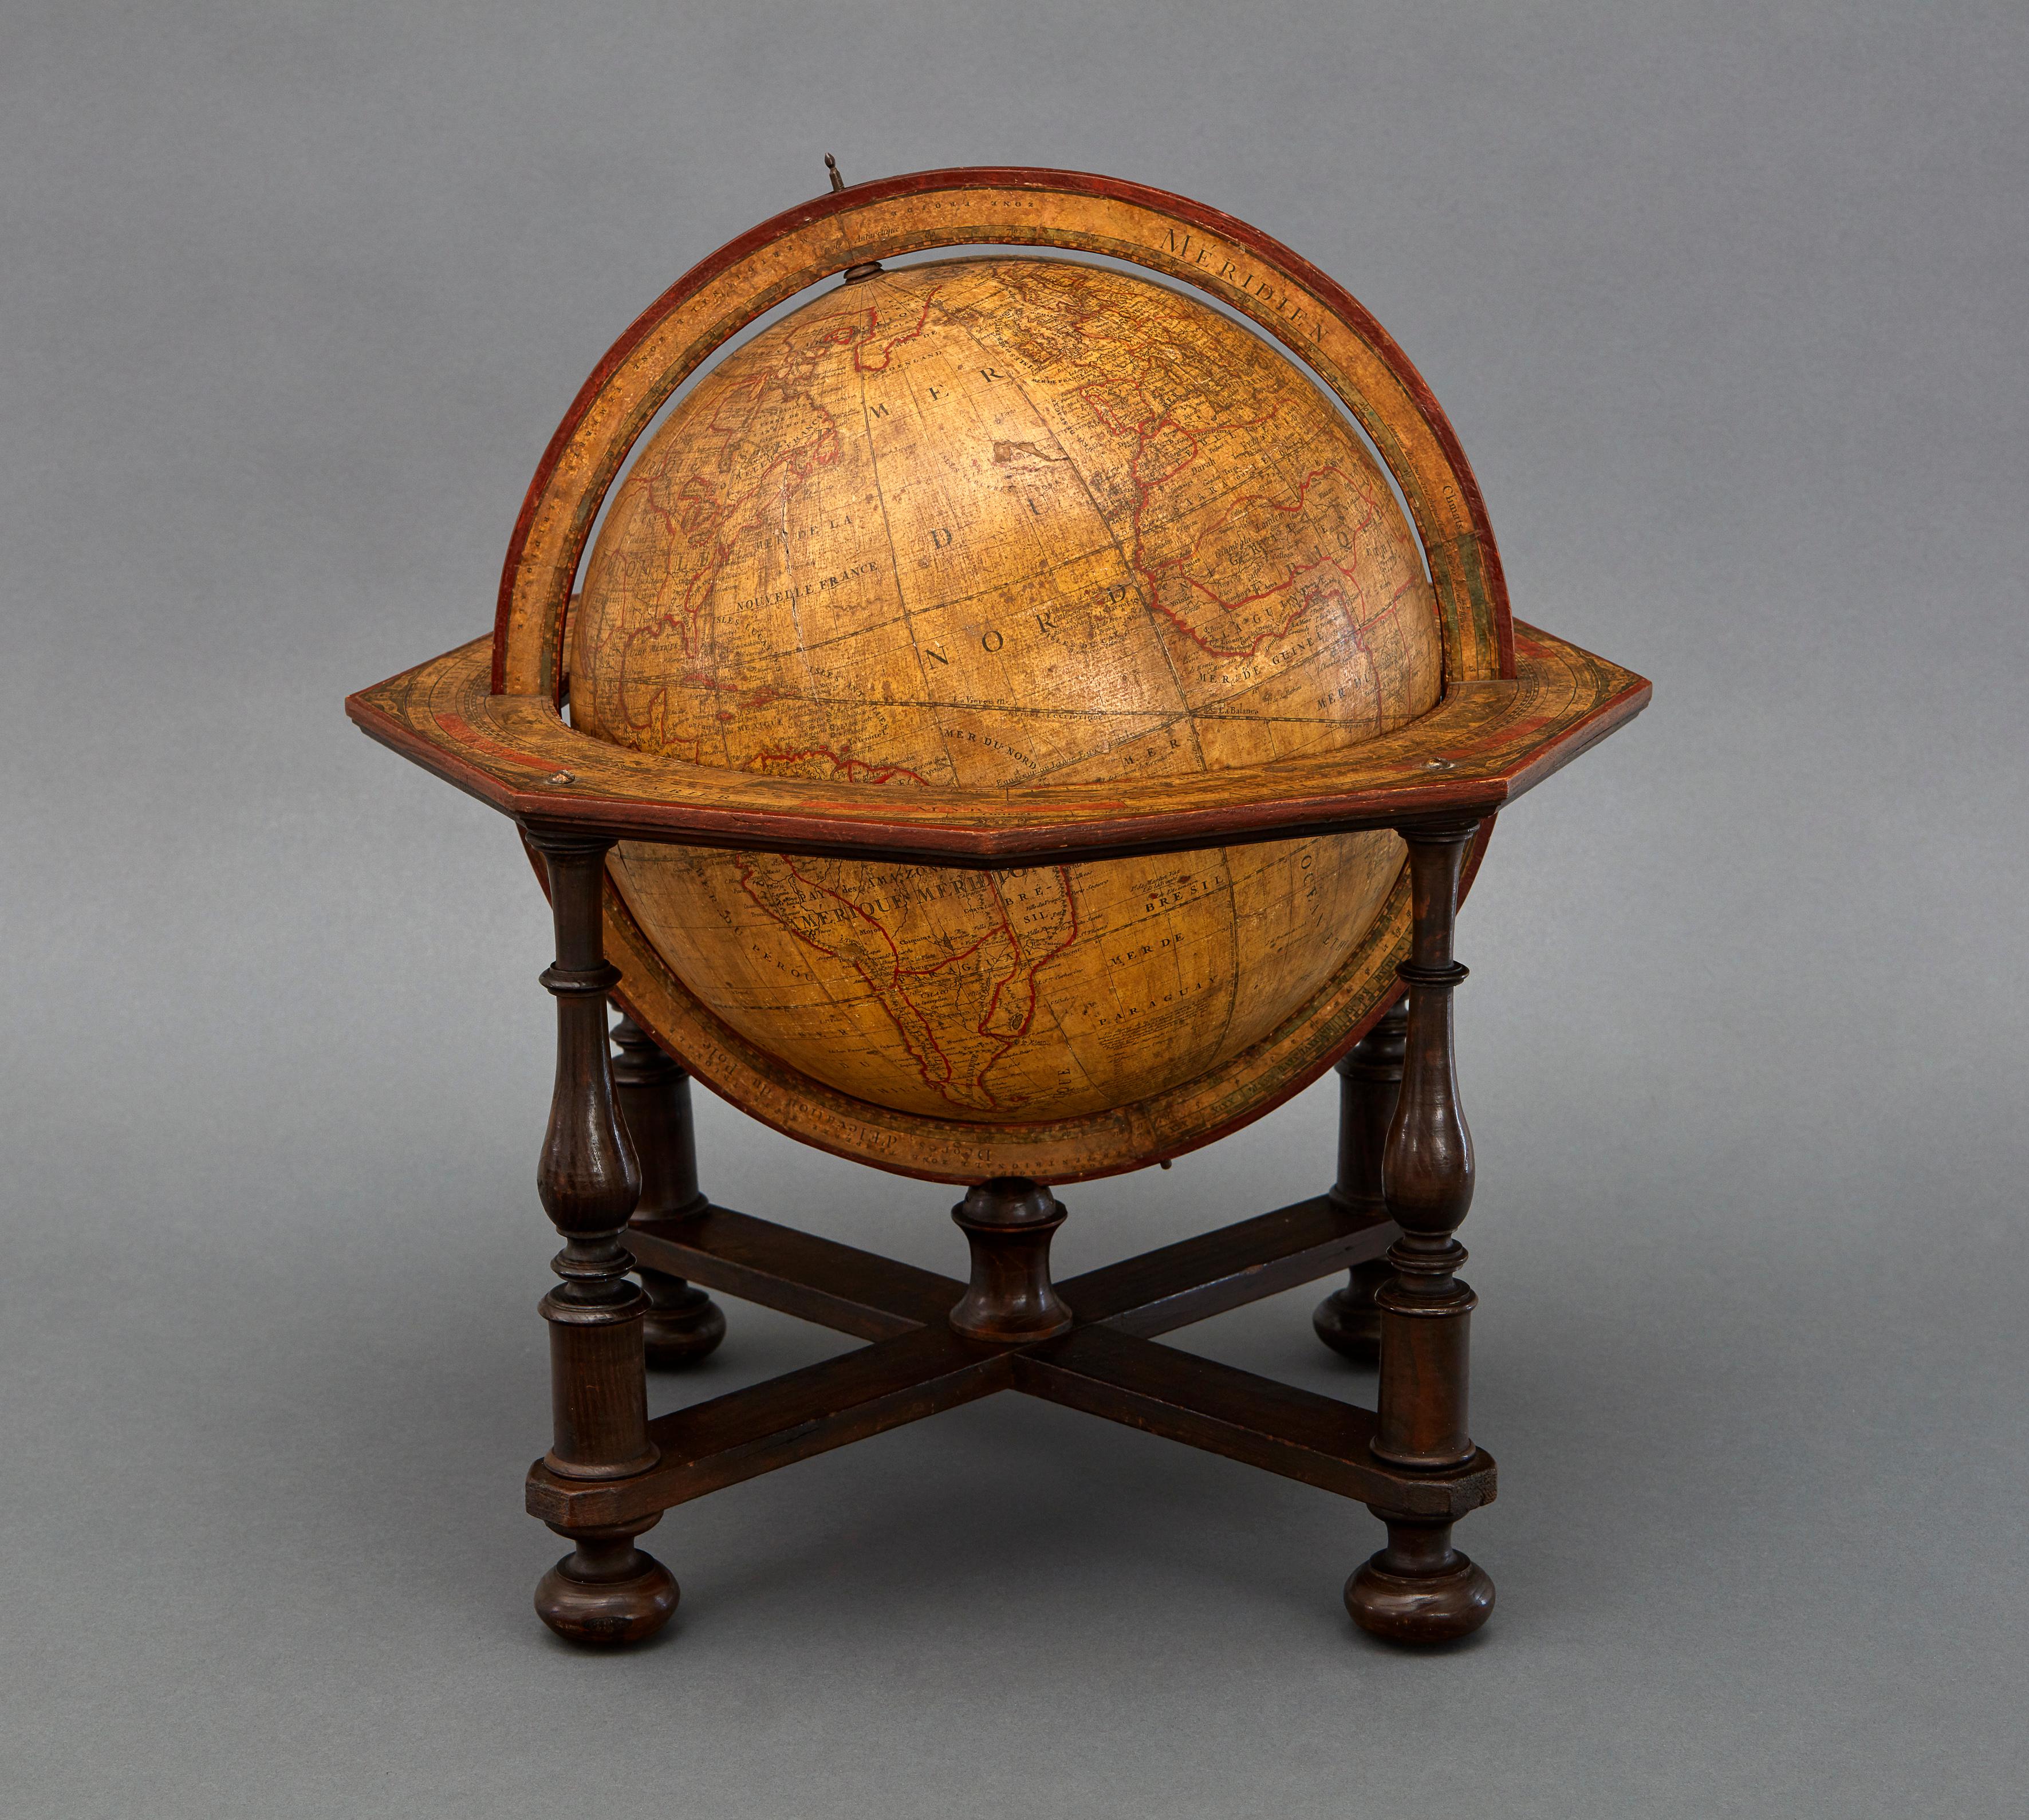 18th century globe